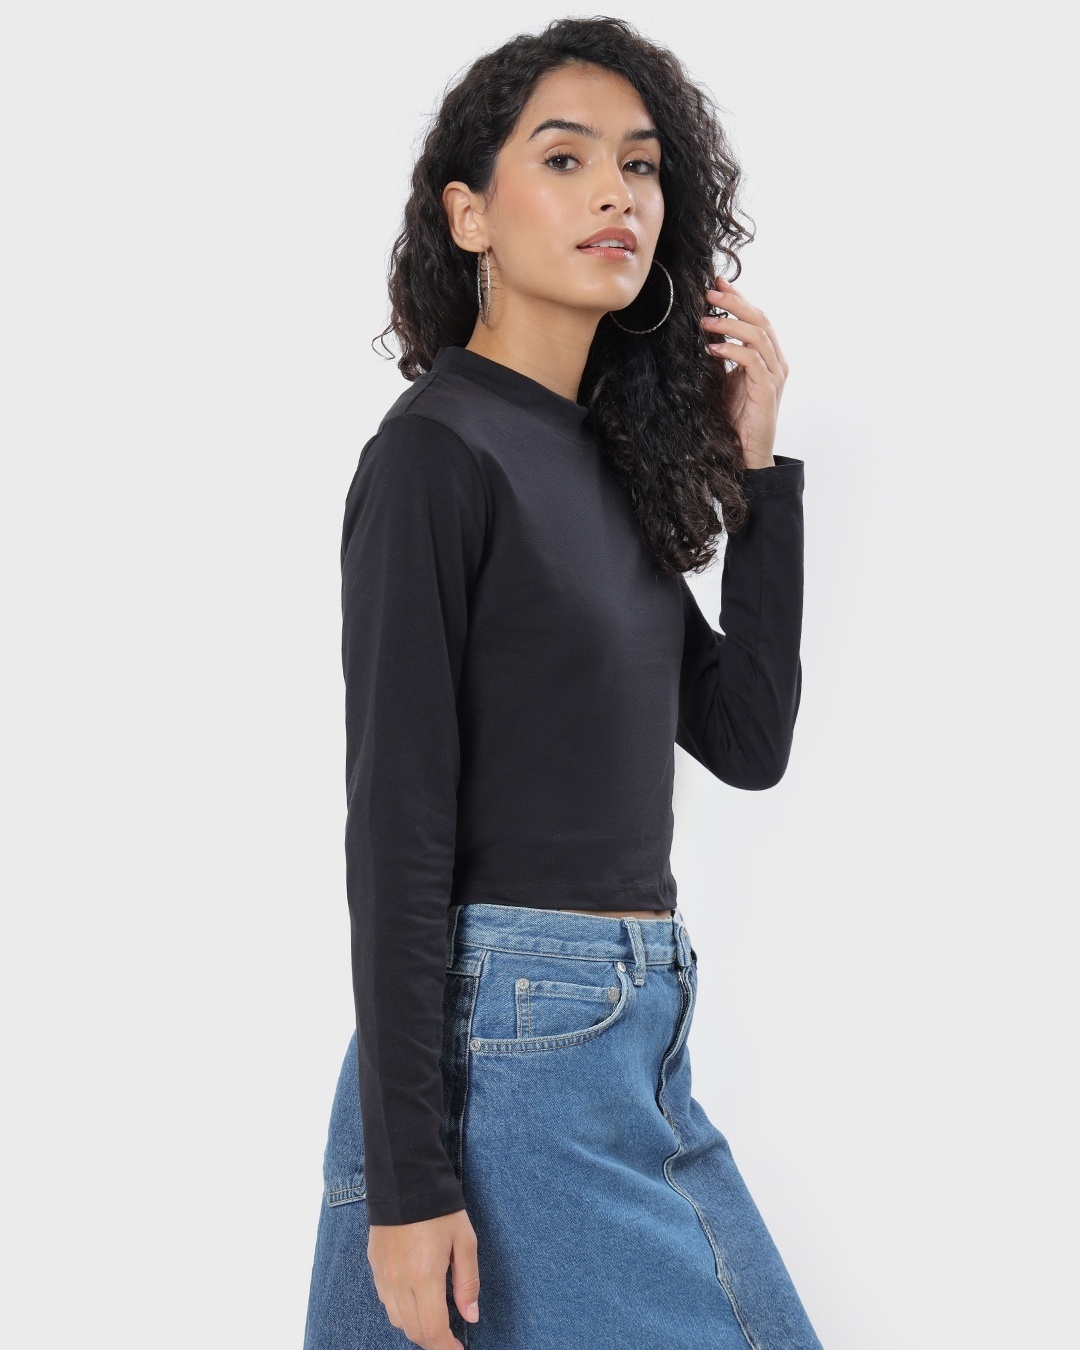 Shop Women's Black Slim Fit Snug Top-Back